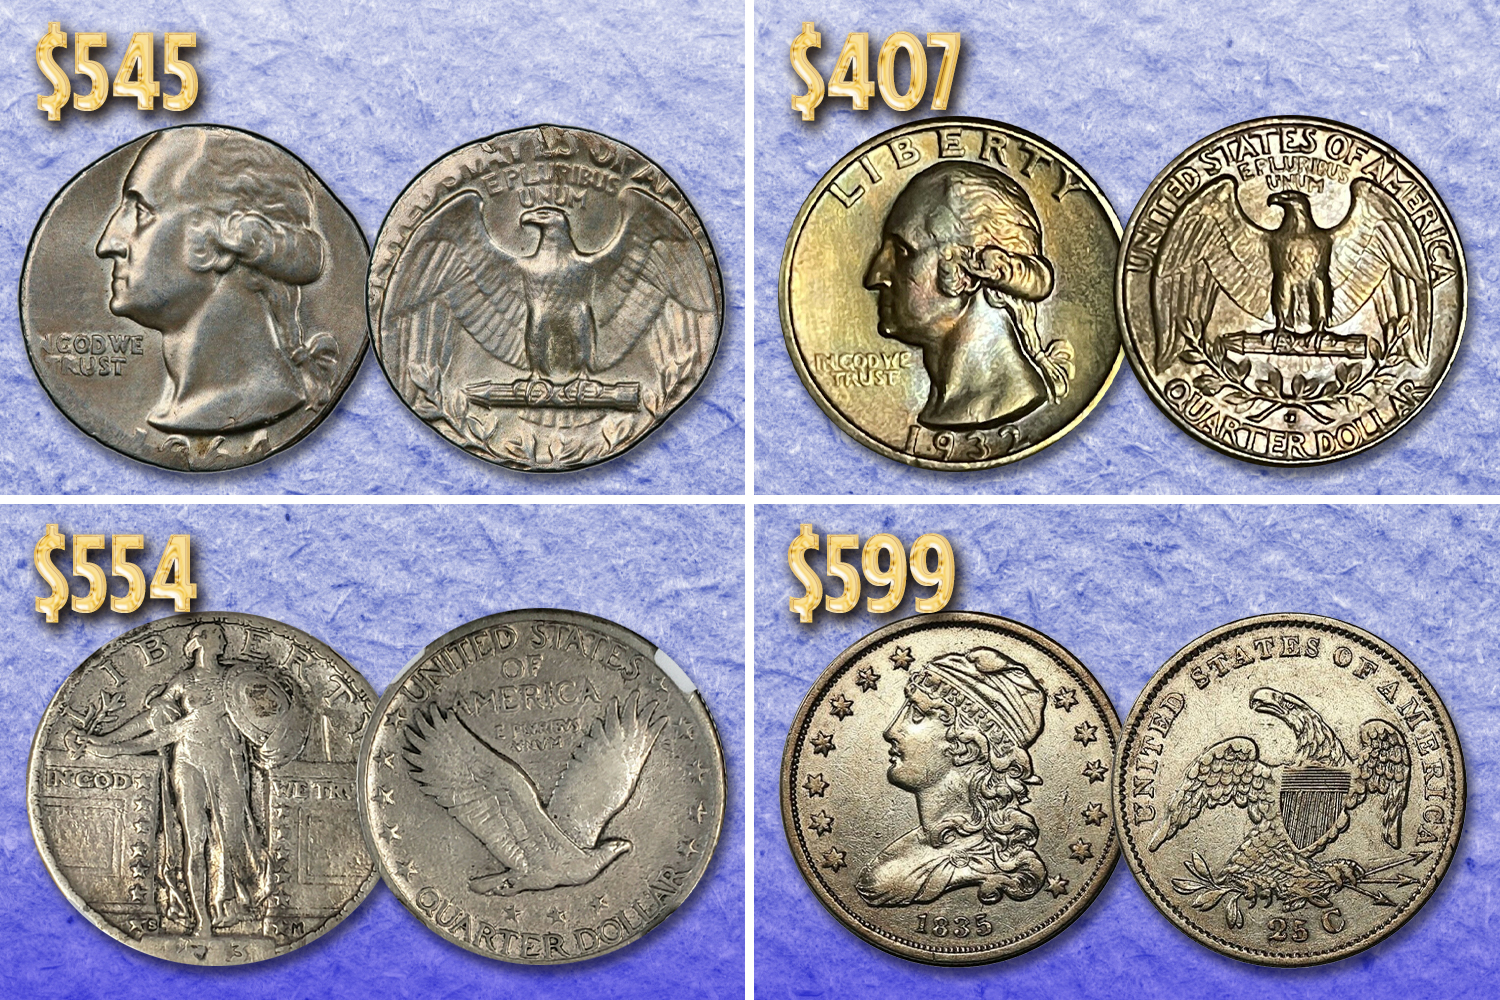 rare-bicentennial-quarter-and-rare-dimes-worth-million-dollars-each-are-still-in-circulationjpg-3